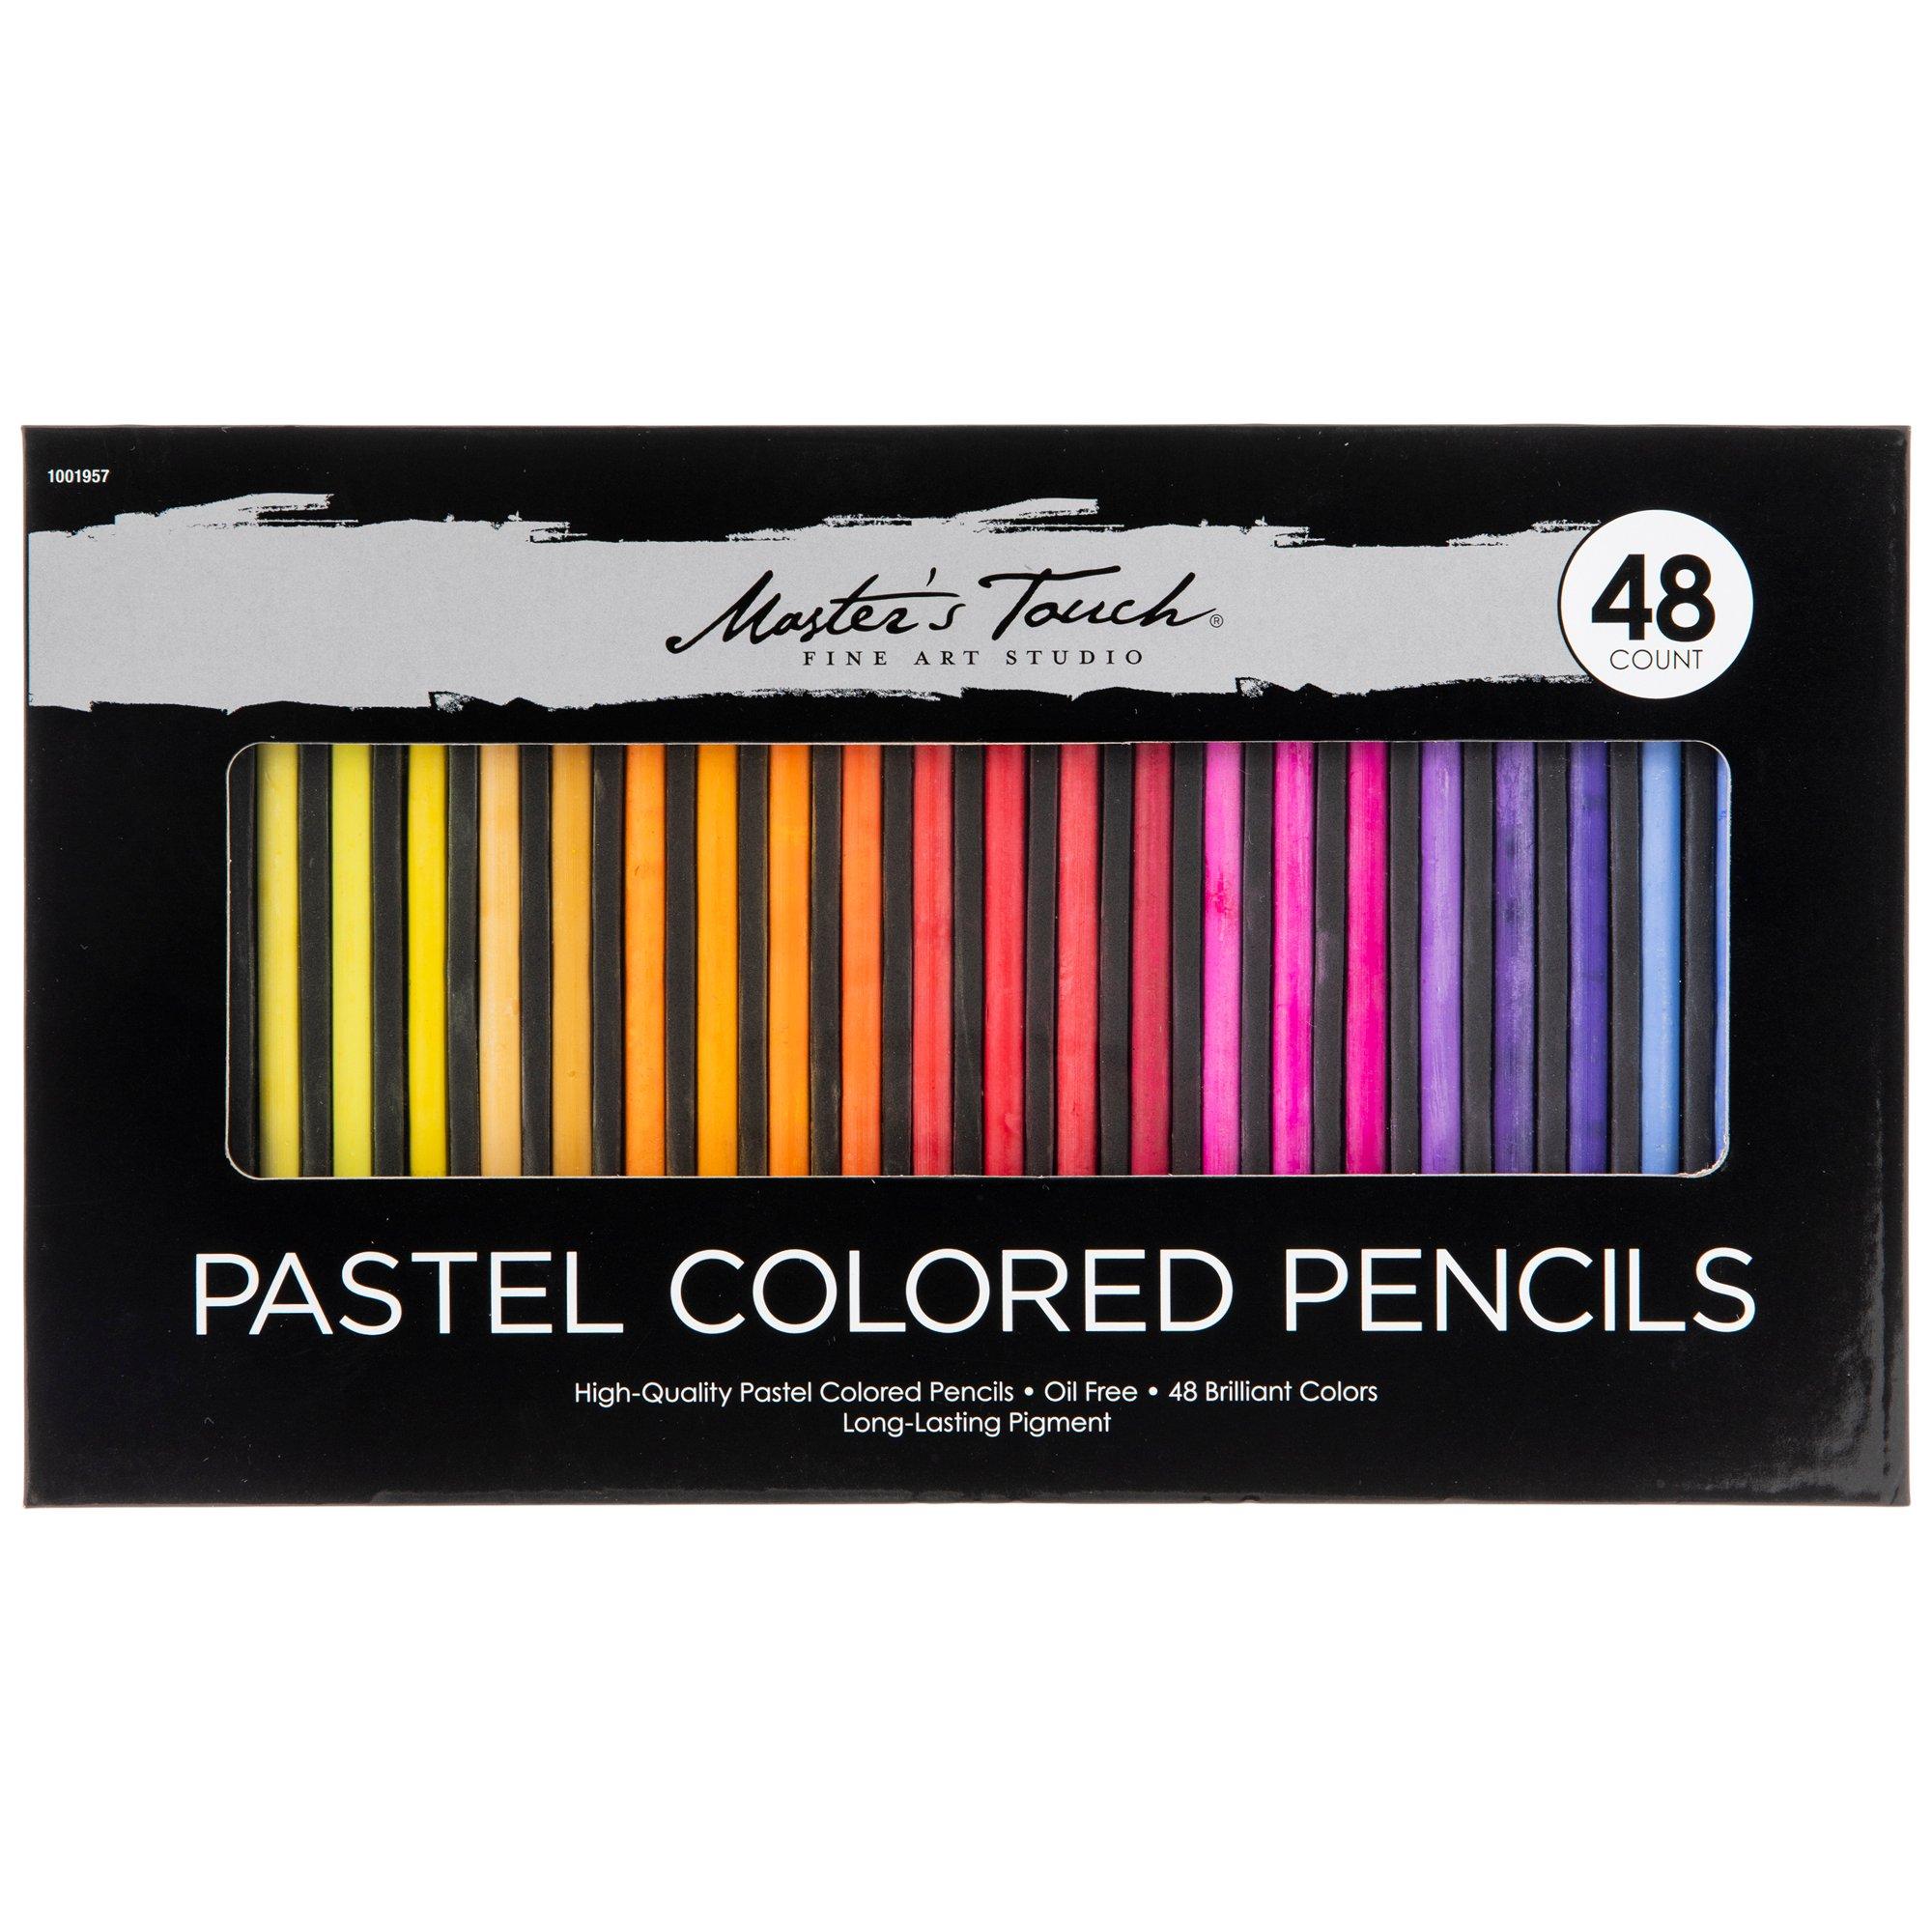 Master's Touch Pastel Colored Pencils - 48 Piece Set